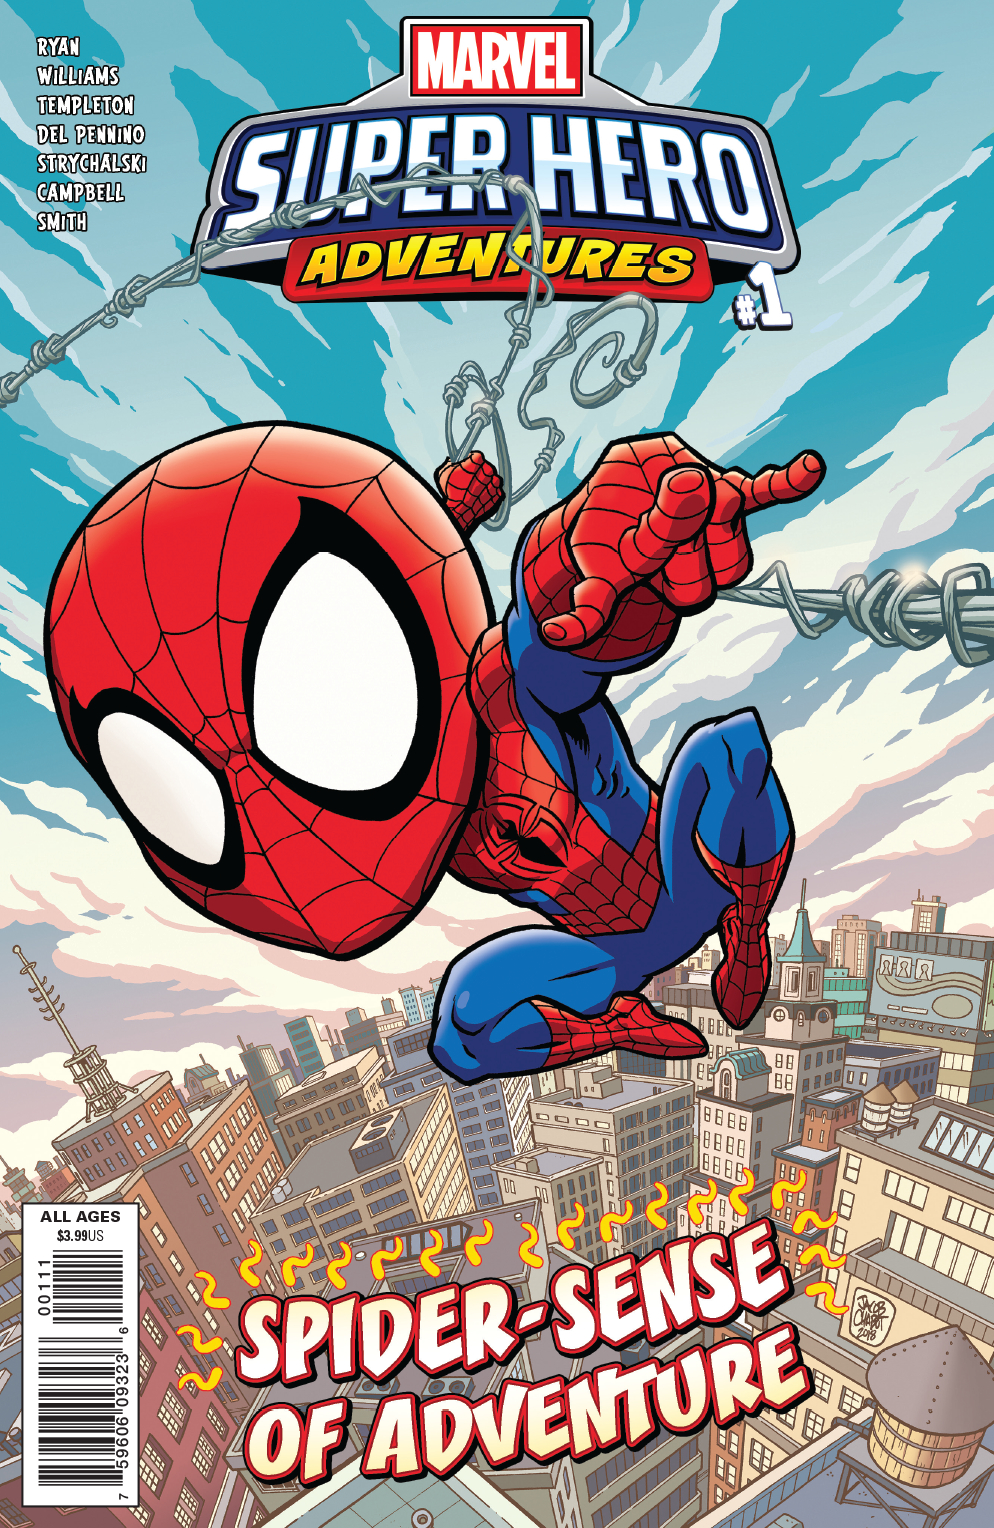 Marvel Superhero Adventures: Spider-man: Spider-Sense of Adventure no. 1 (2019)